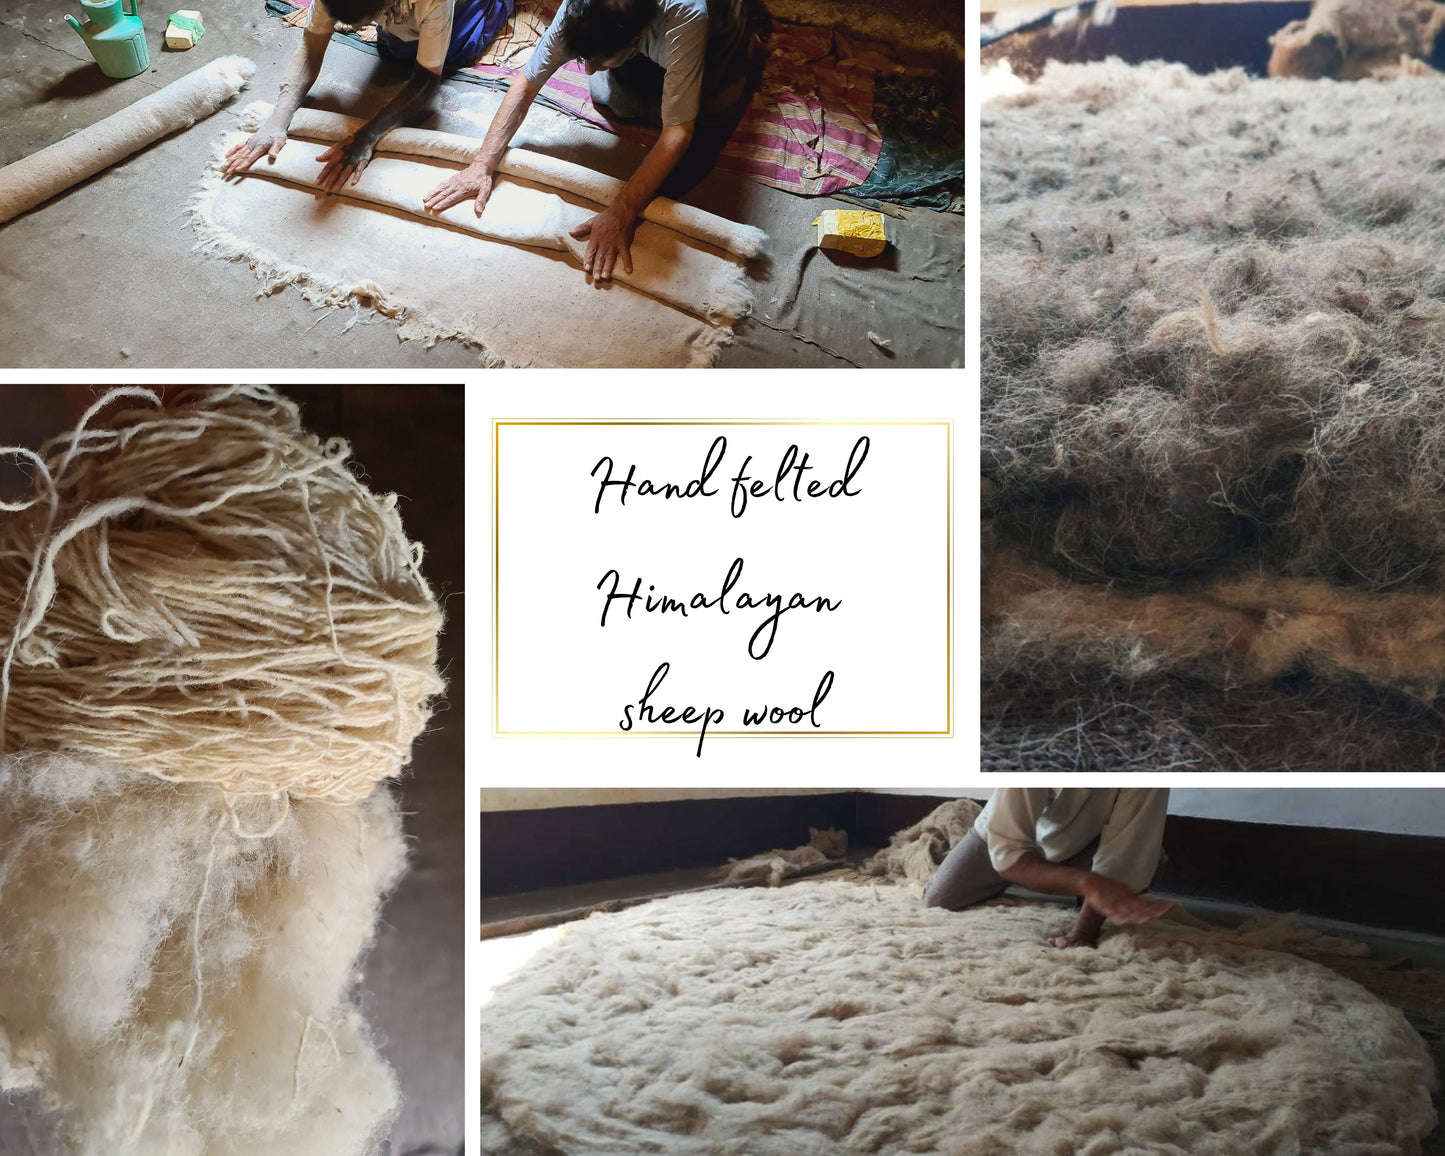 Himalayan Hues: Handmade Namda Wool Rug 6x9ft – Tradition and Warmth Infused with Kashmiri Charm!